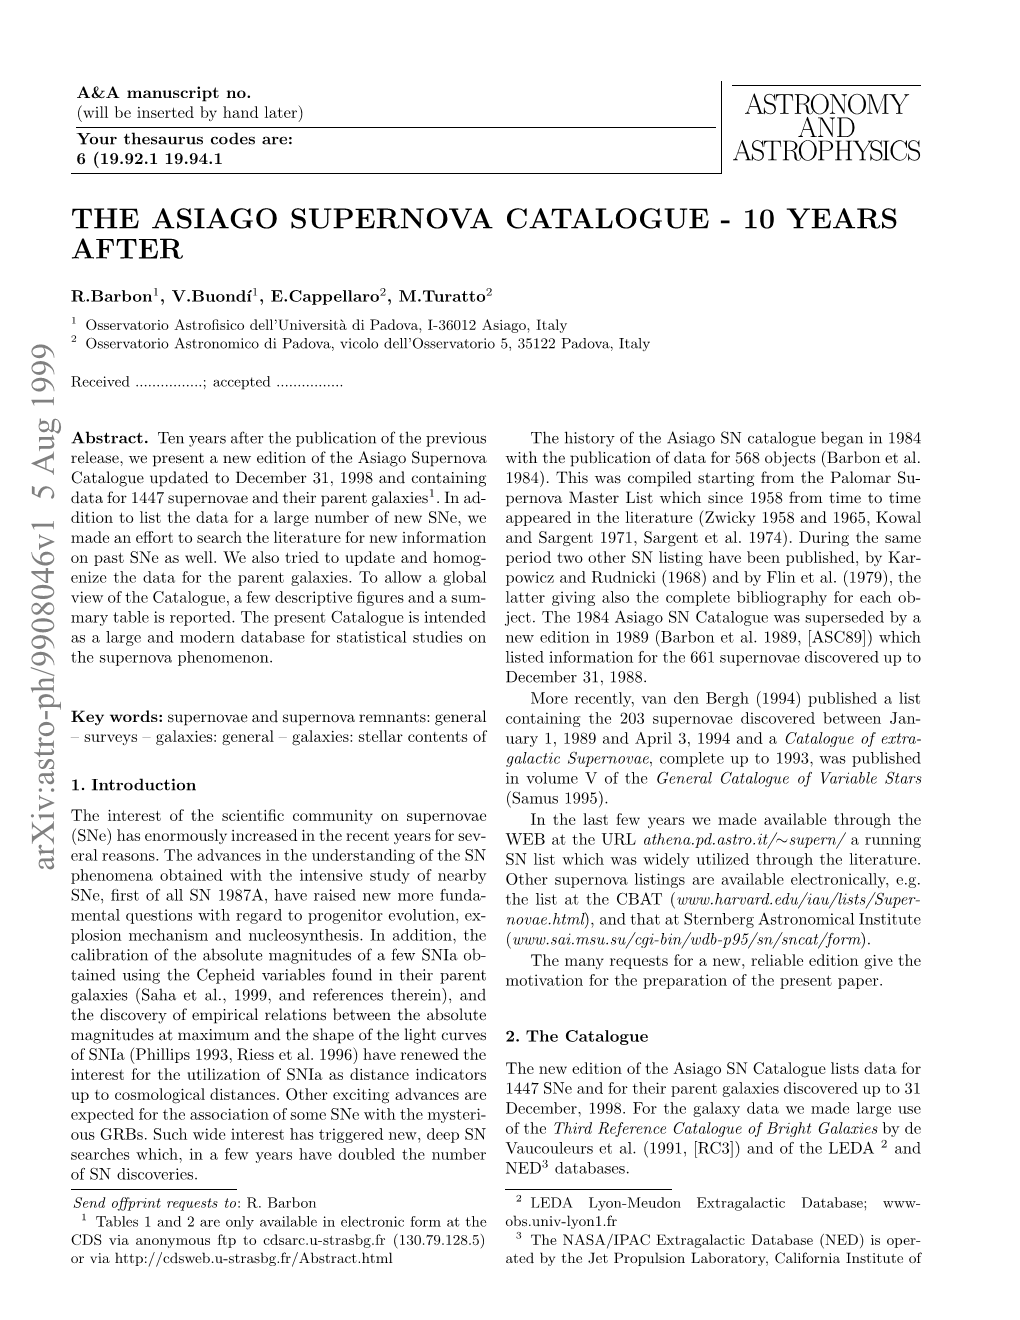 Astronomy and Astrophysics the Asiago Supernova Catalogue